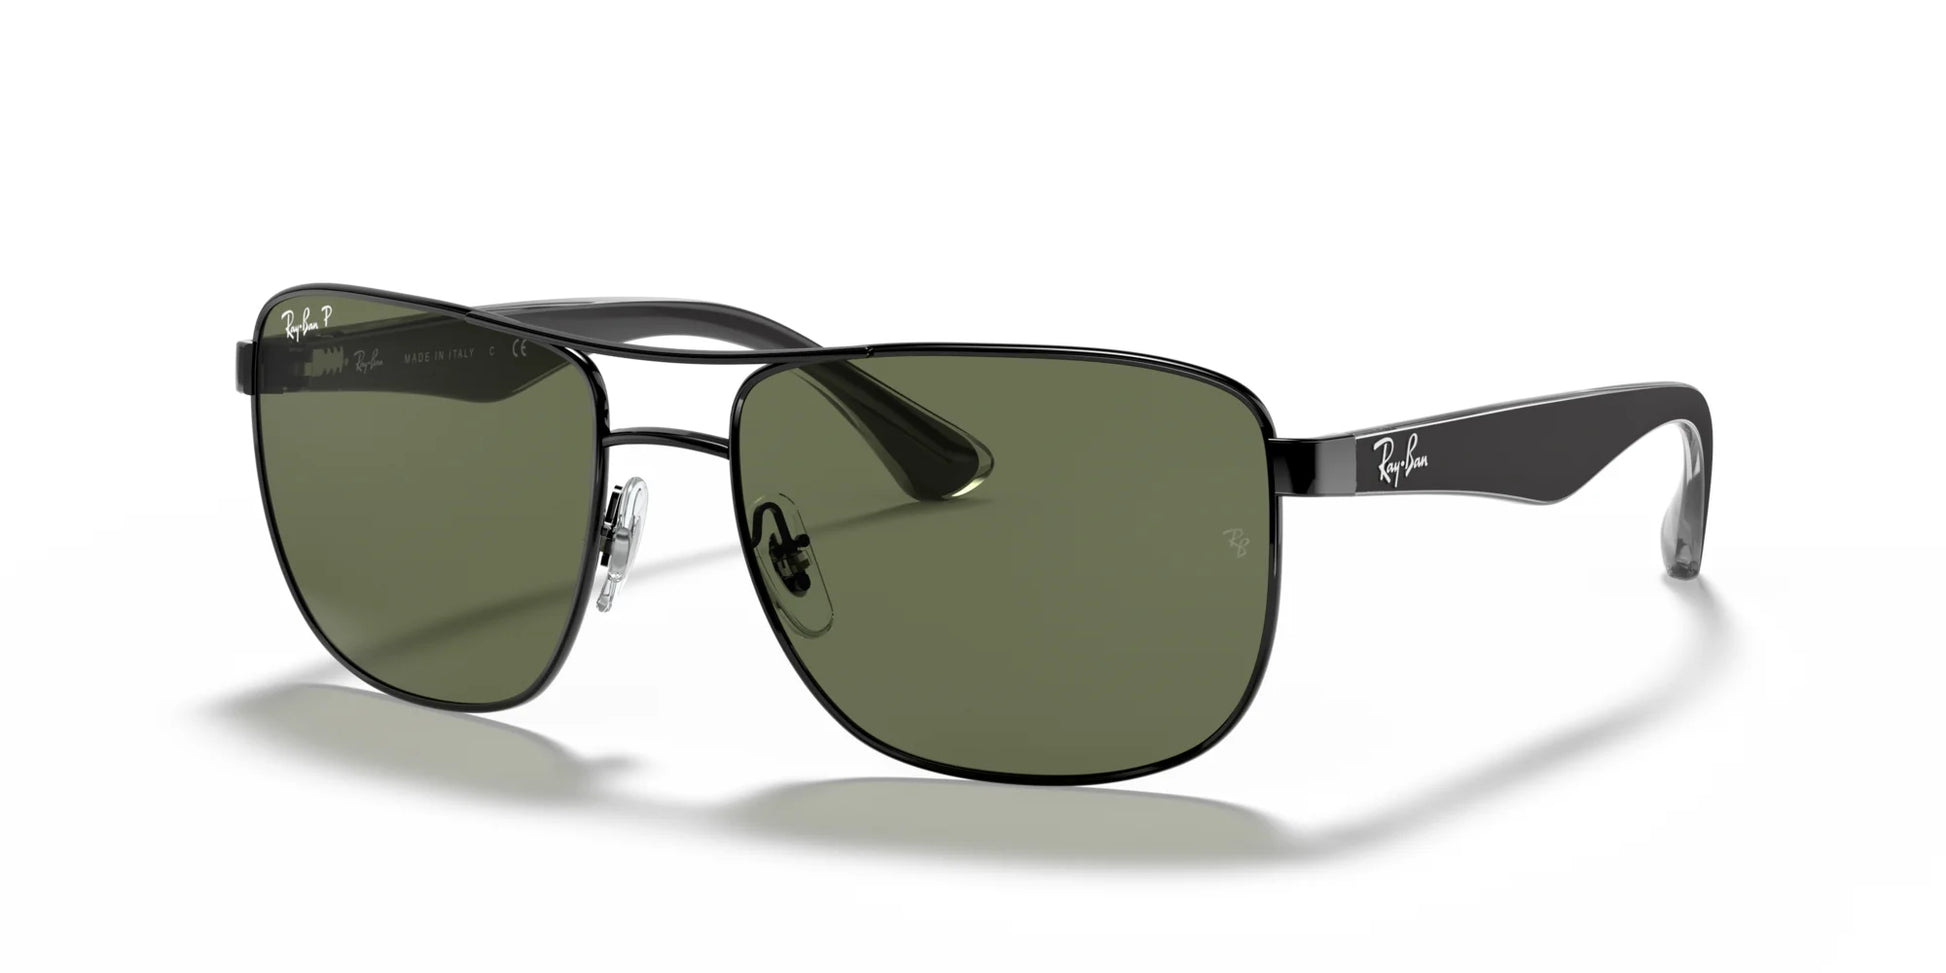 Ray-Ban RB3533 Sunglasses Black / Green